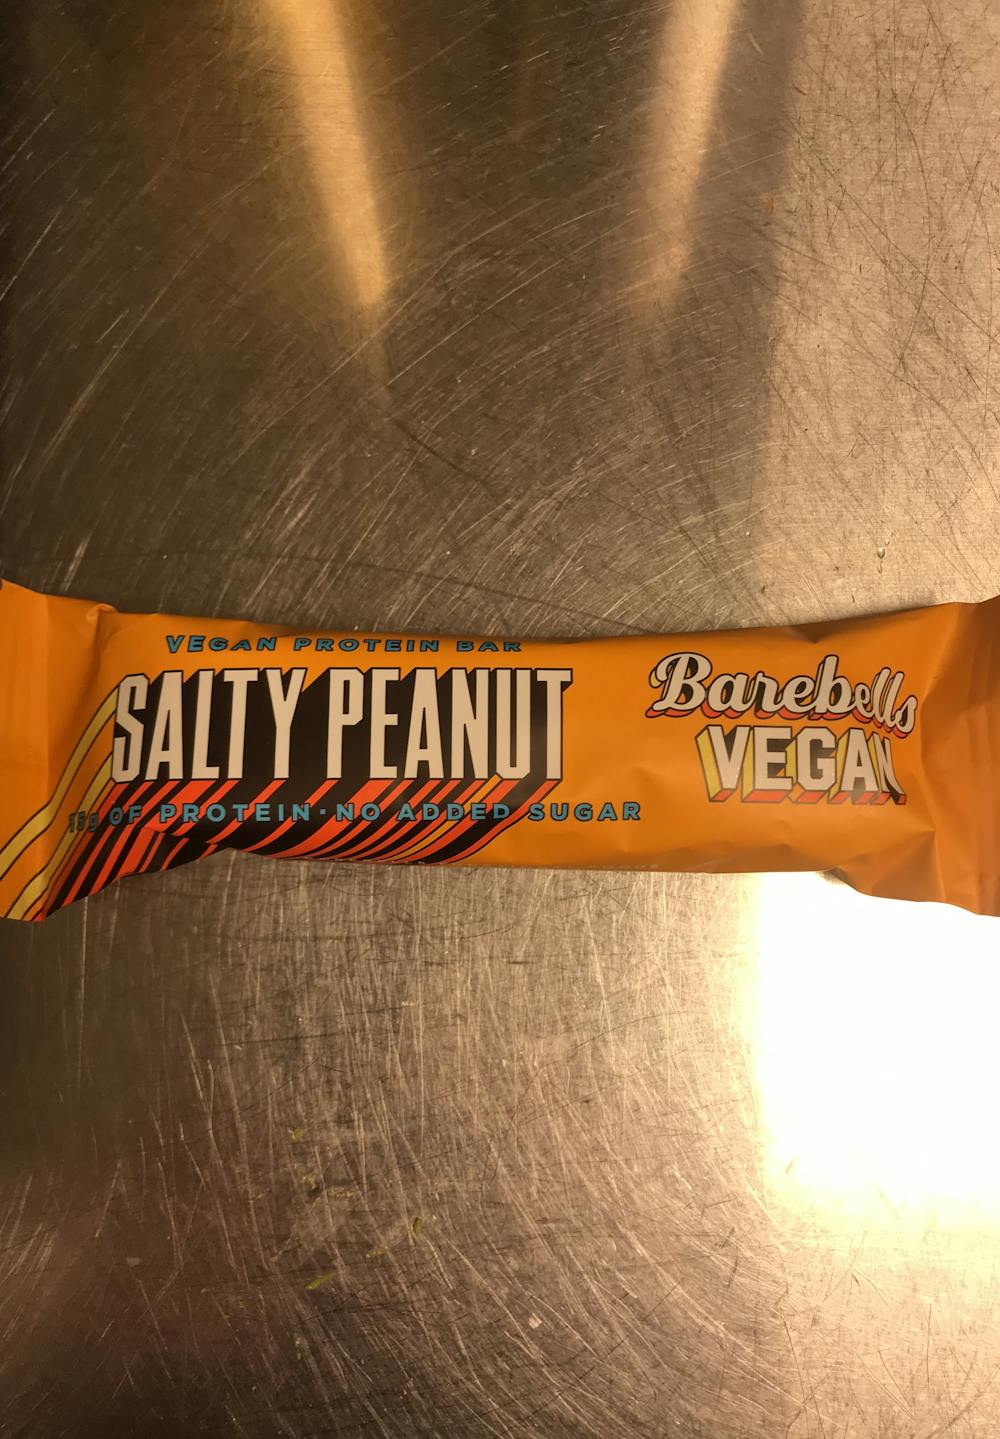 Salty peanut, vegan, Barebells